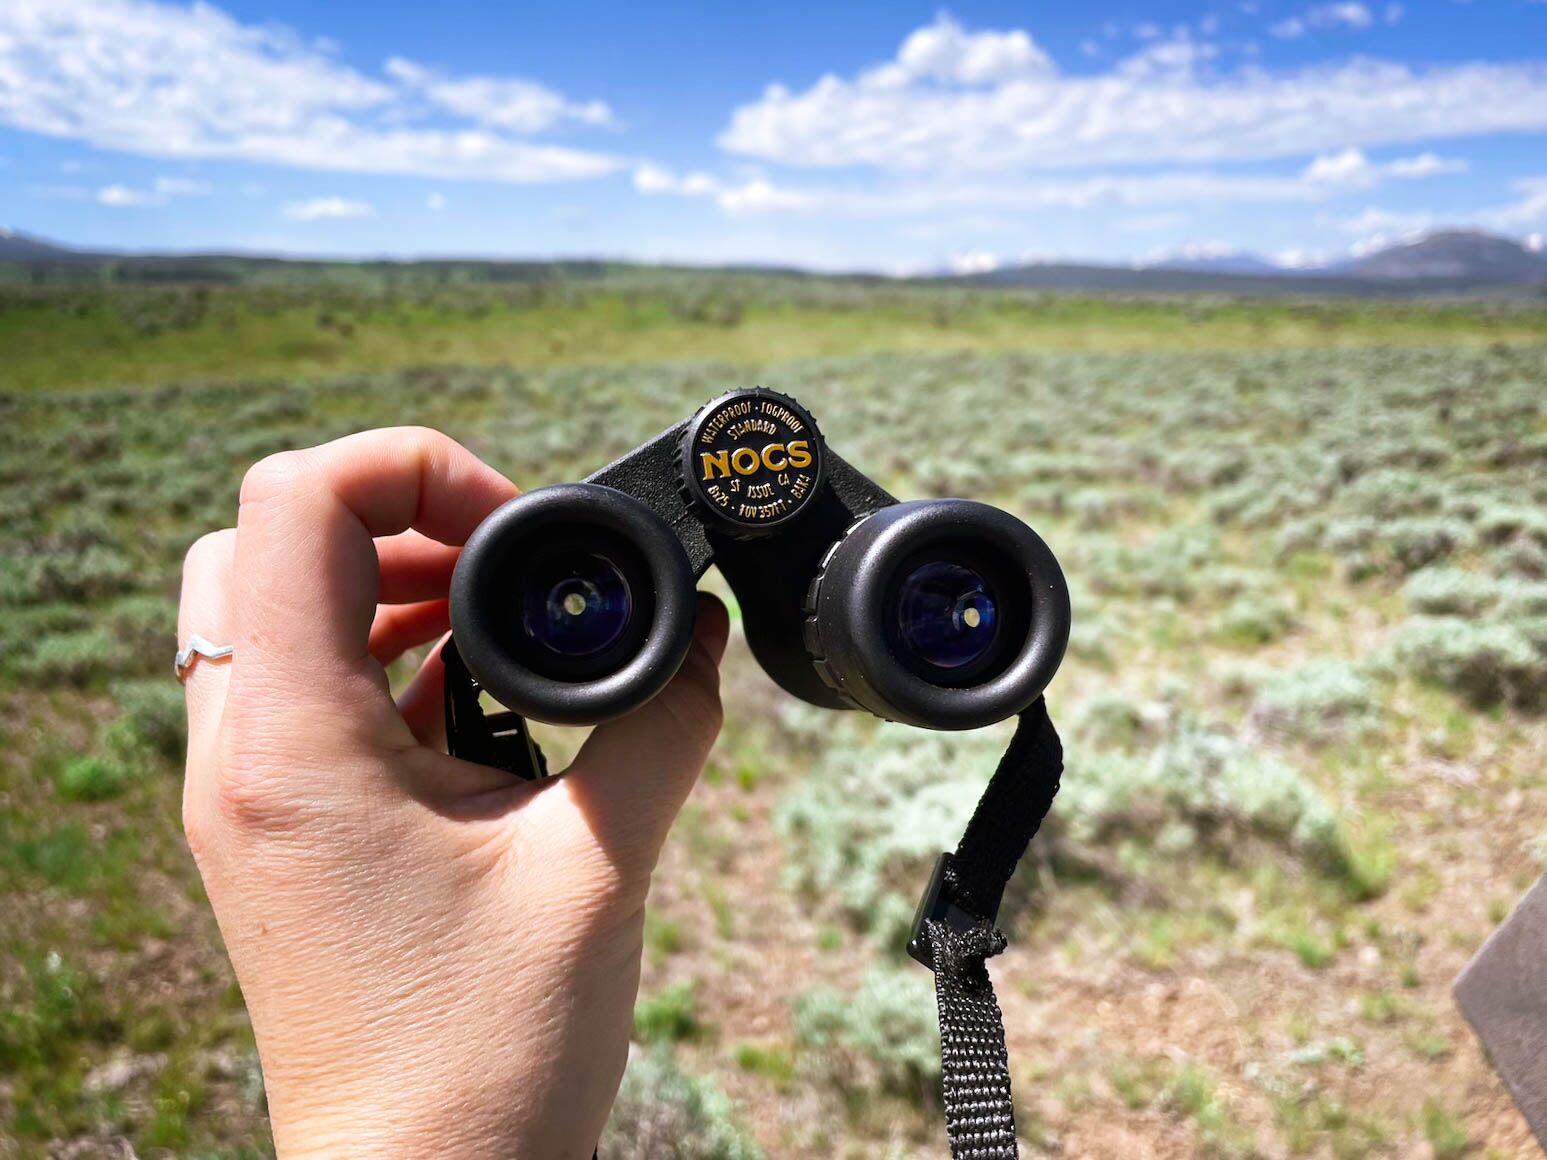 travel binoculars - nocs field issue